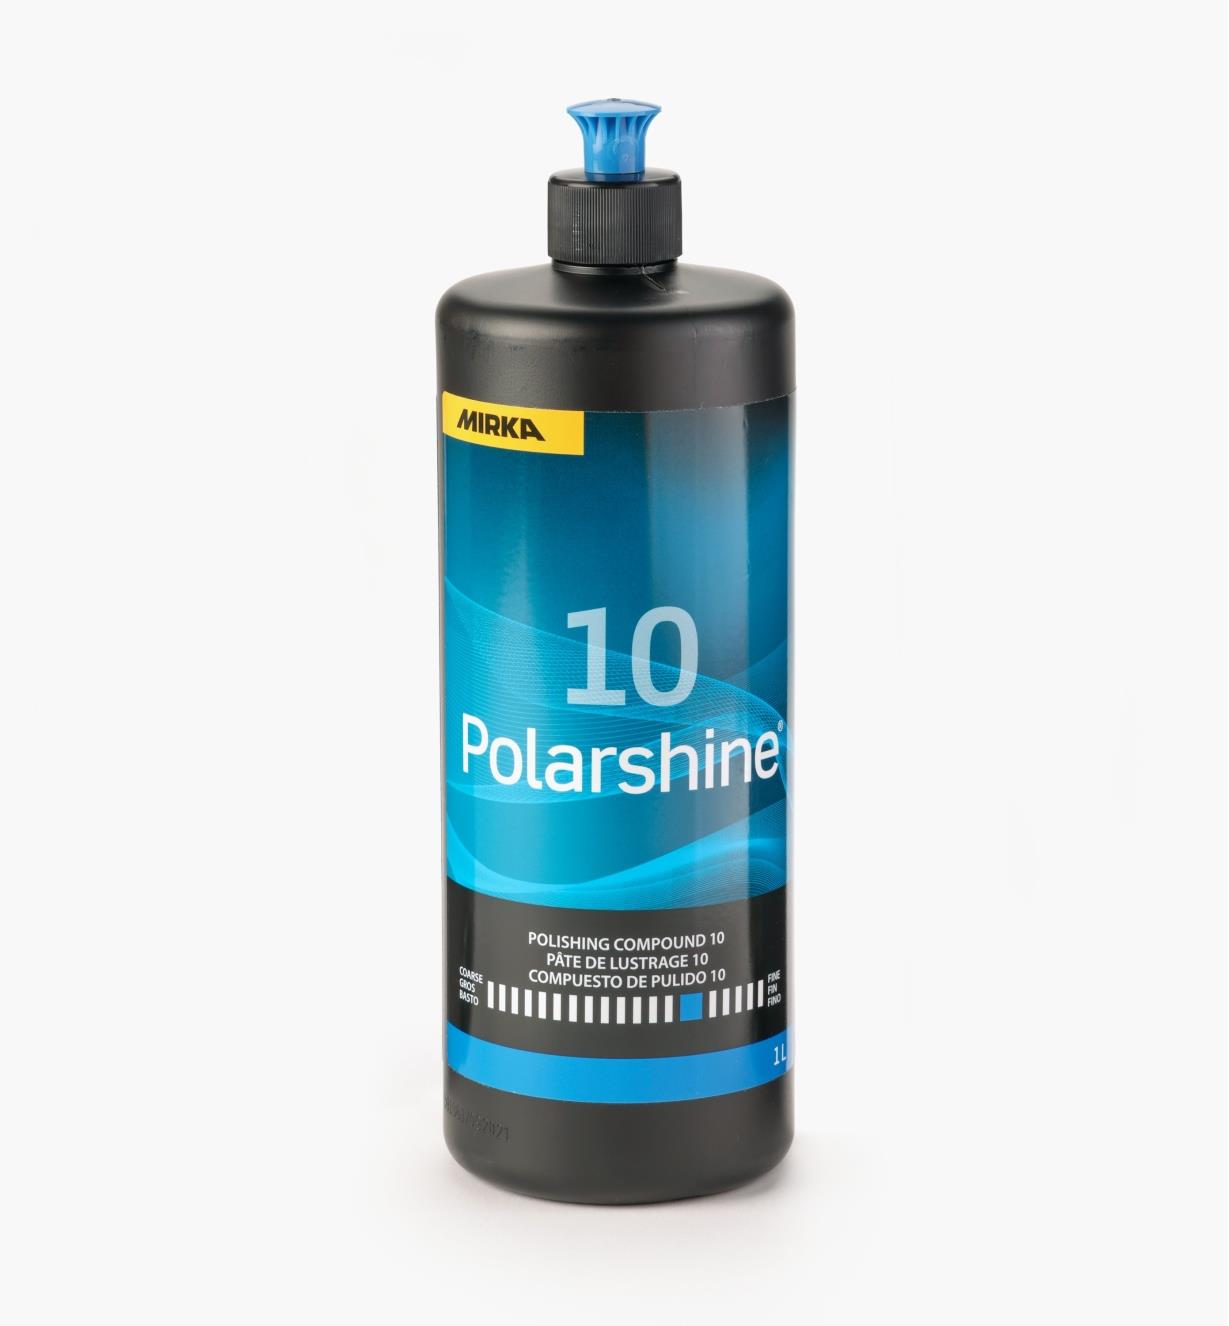 08K5006 - Polarshine 10 Polishing Compound, 1 litre